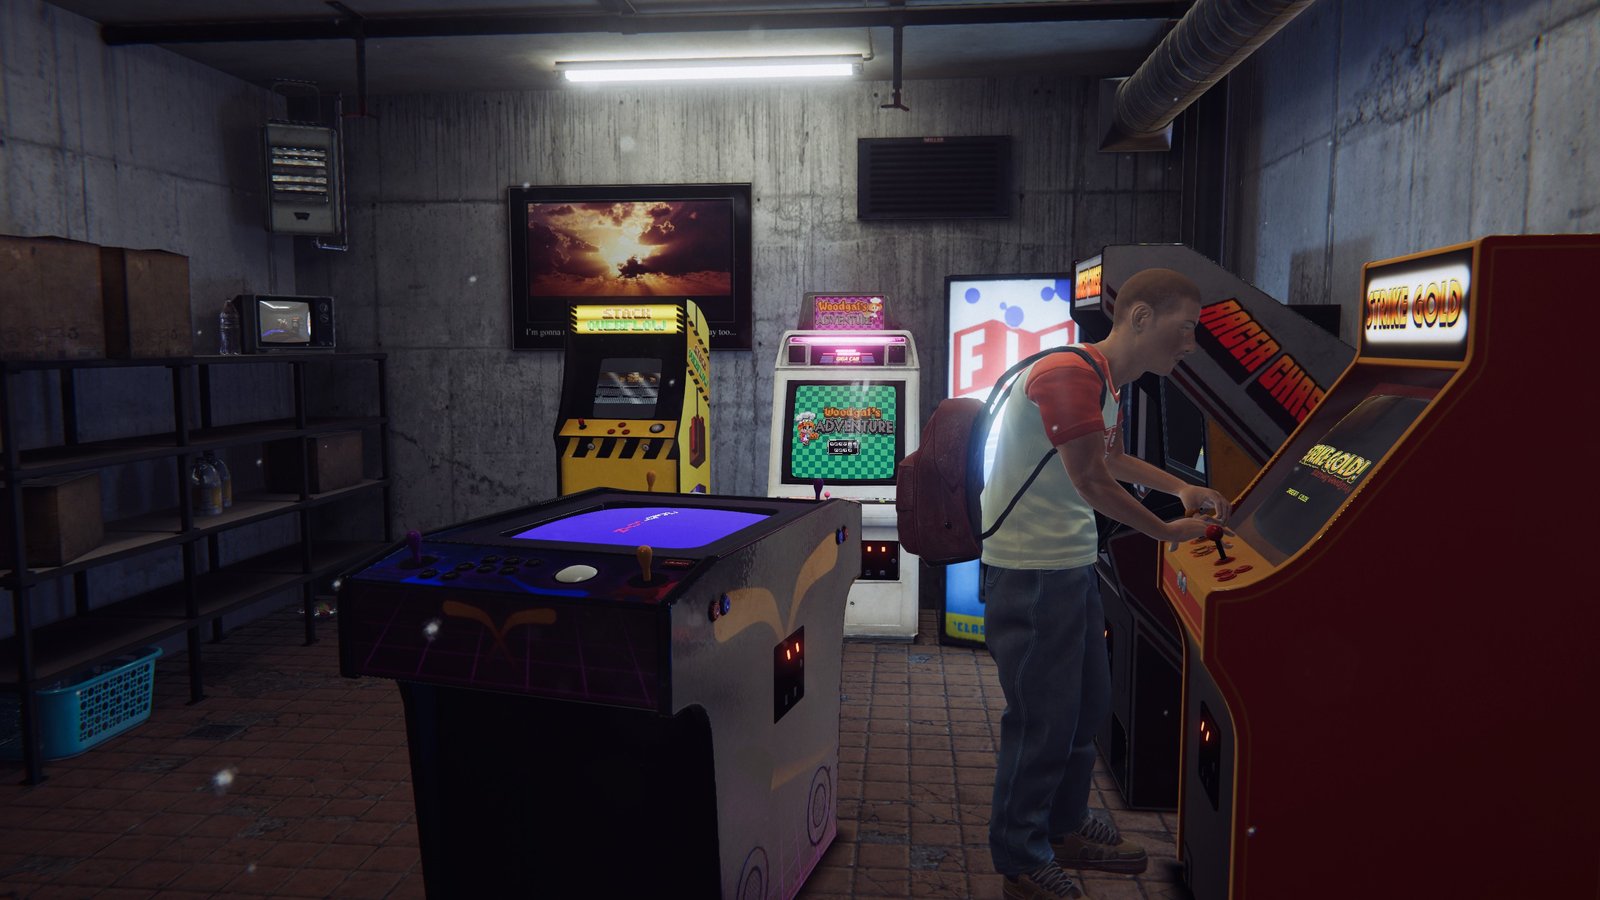 An arcade